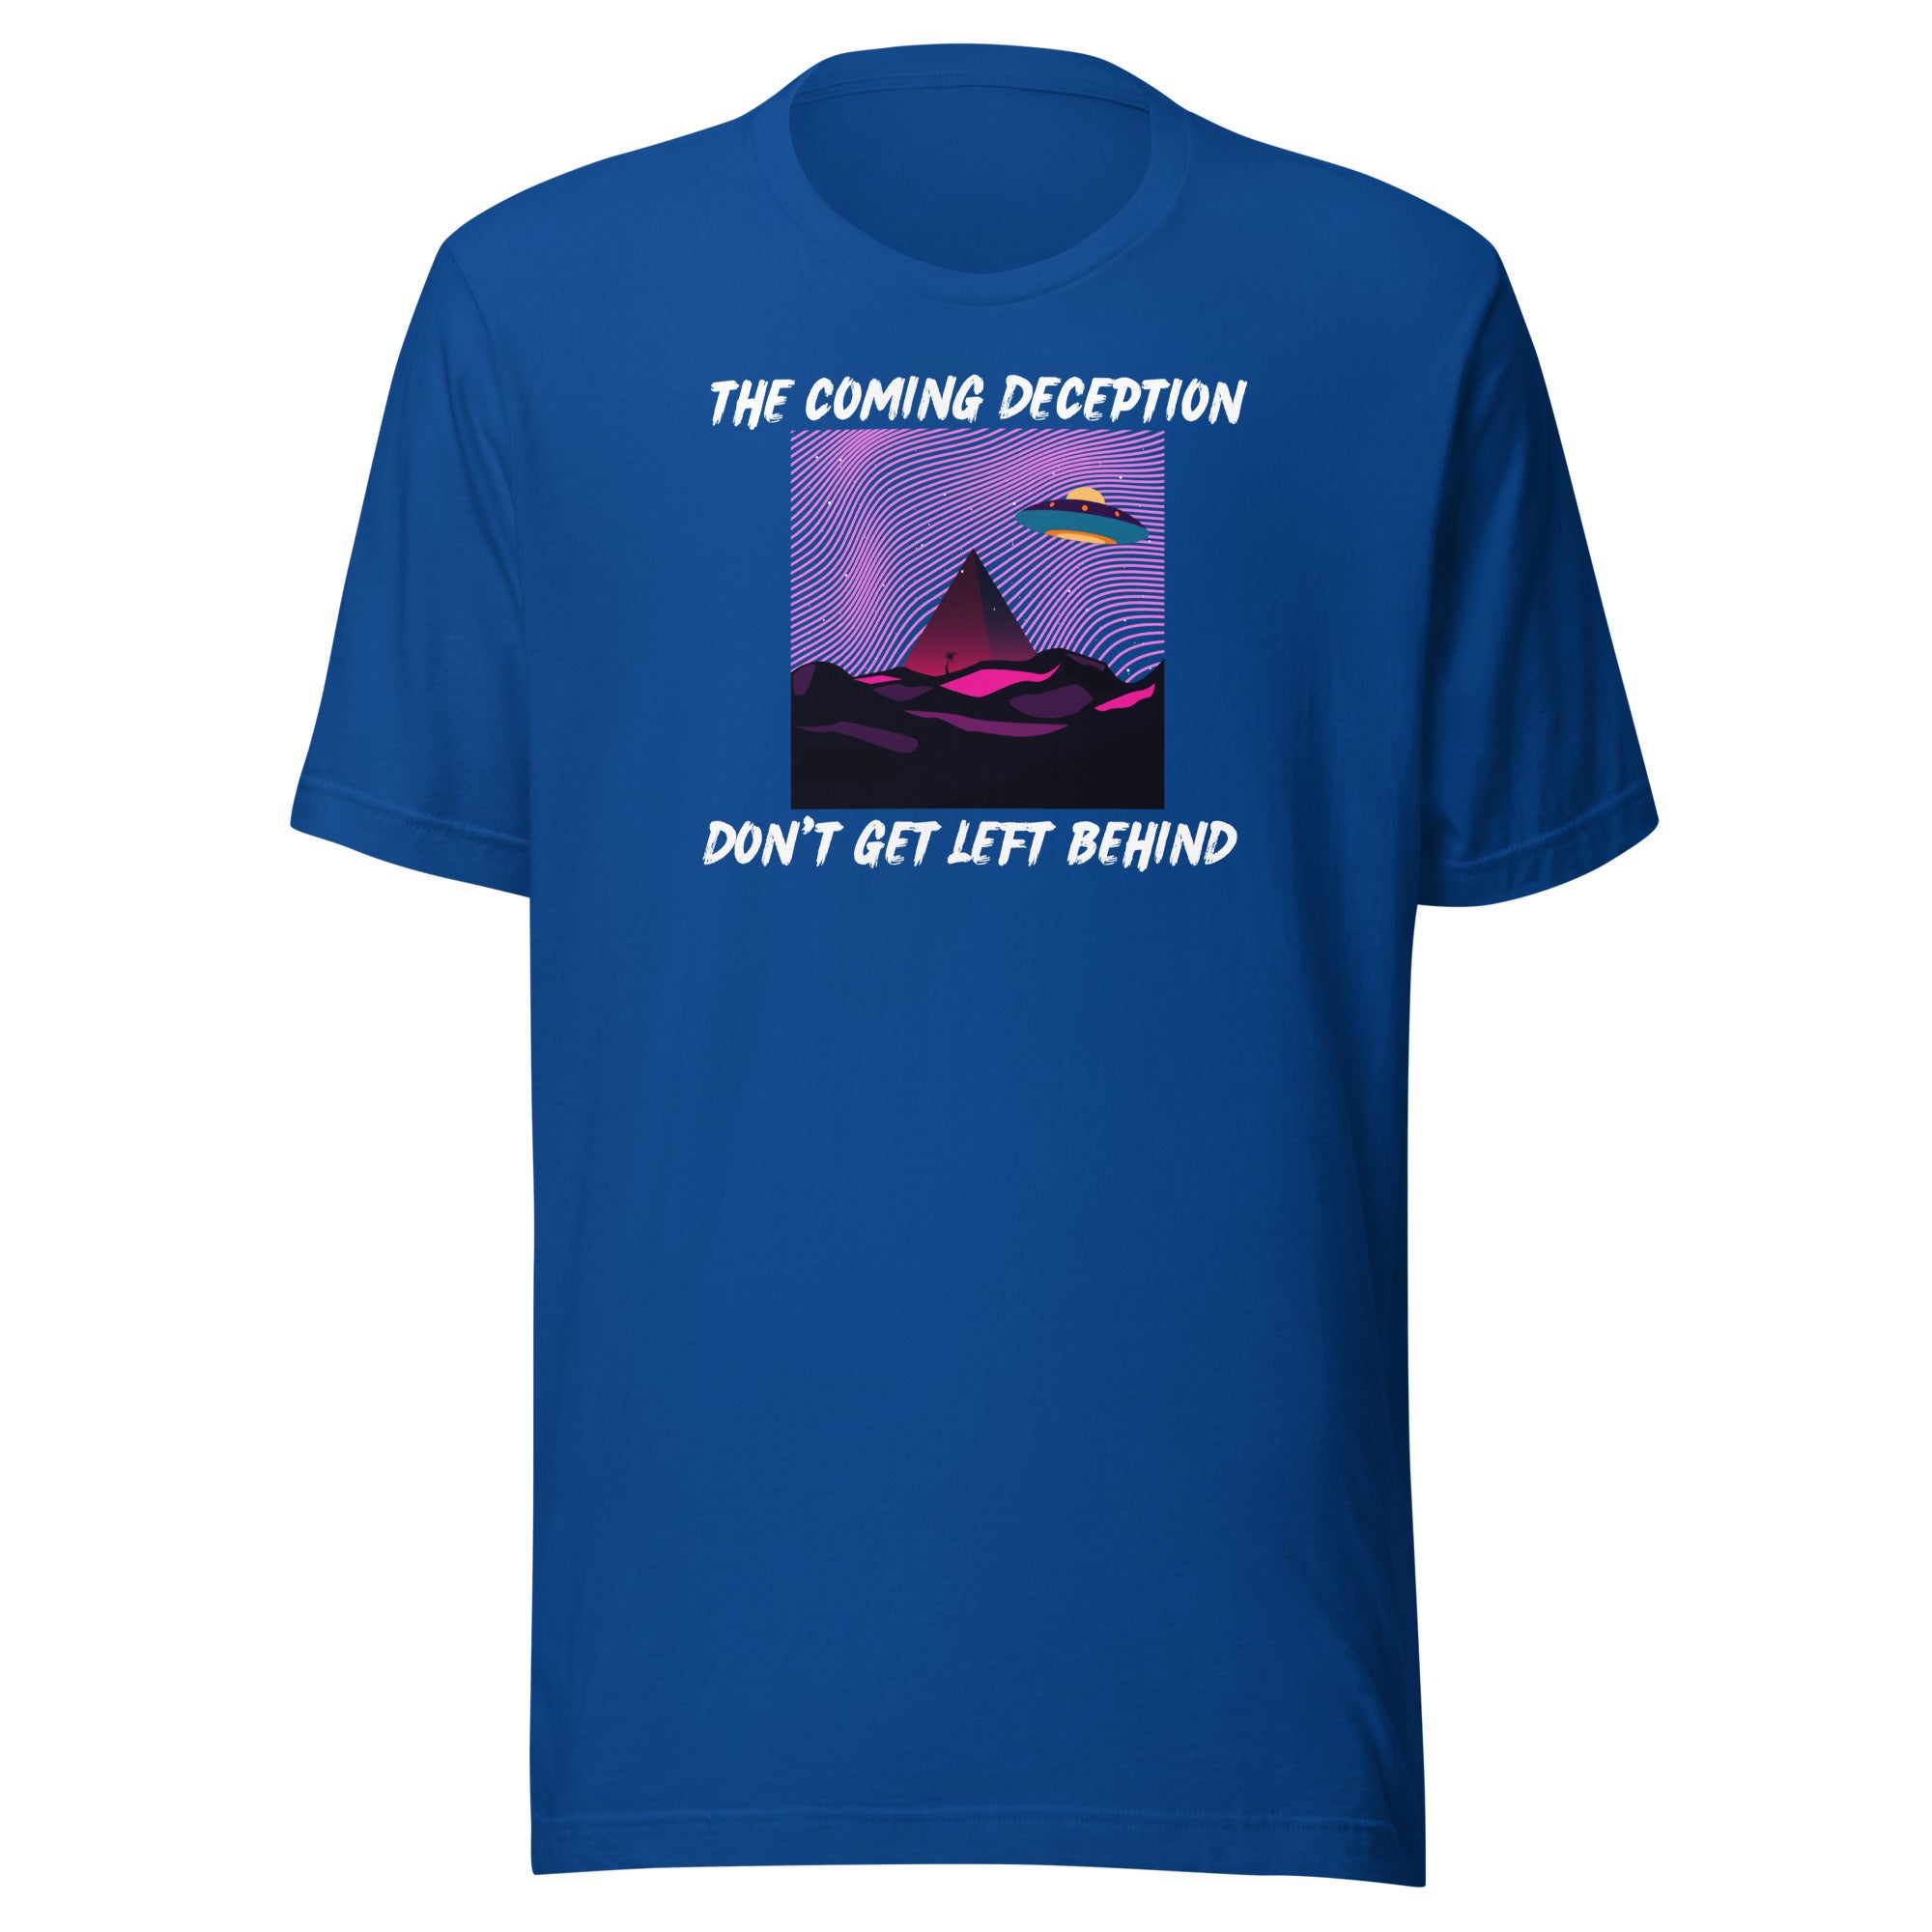 Coming deception Unisex t-shirt